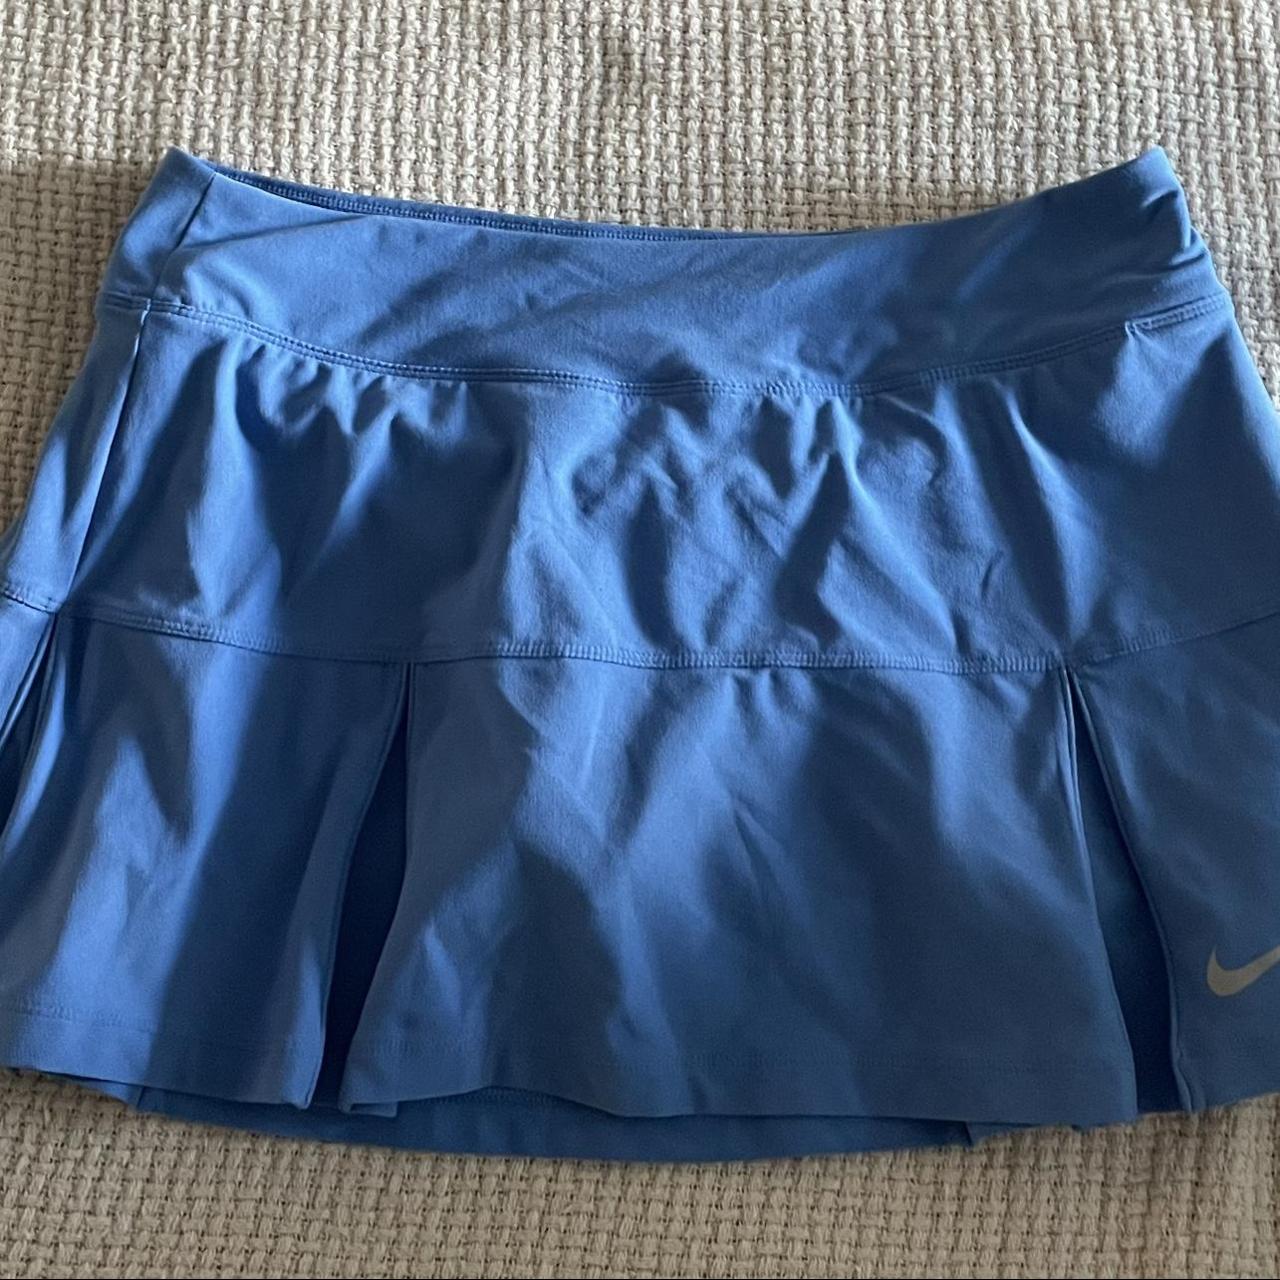 Blue Nike tennis skirt size: medium great condition - Depop